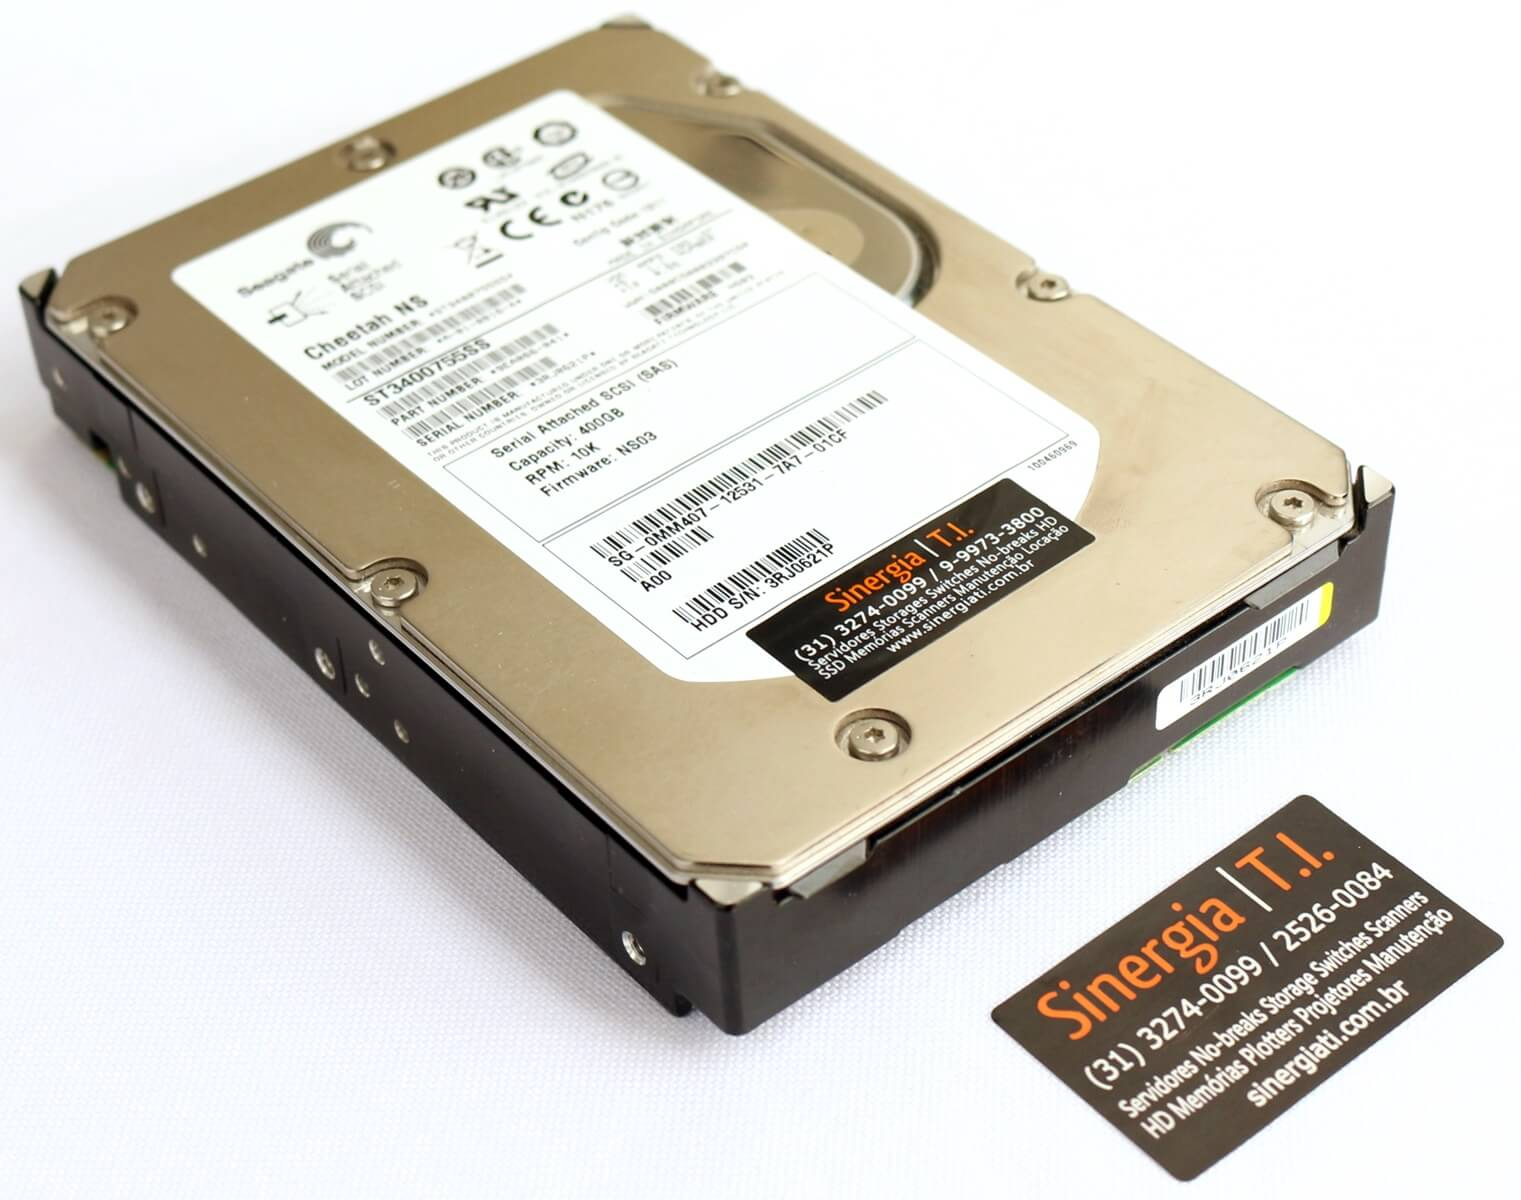 9EA066-041 HD Seagate 400GB SAS 3Gbps 10K RPM LFF 3,5" Cheetah NS modelo Enterprise para Servidor Dell pronta entrega em estoque